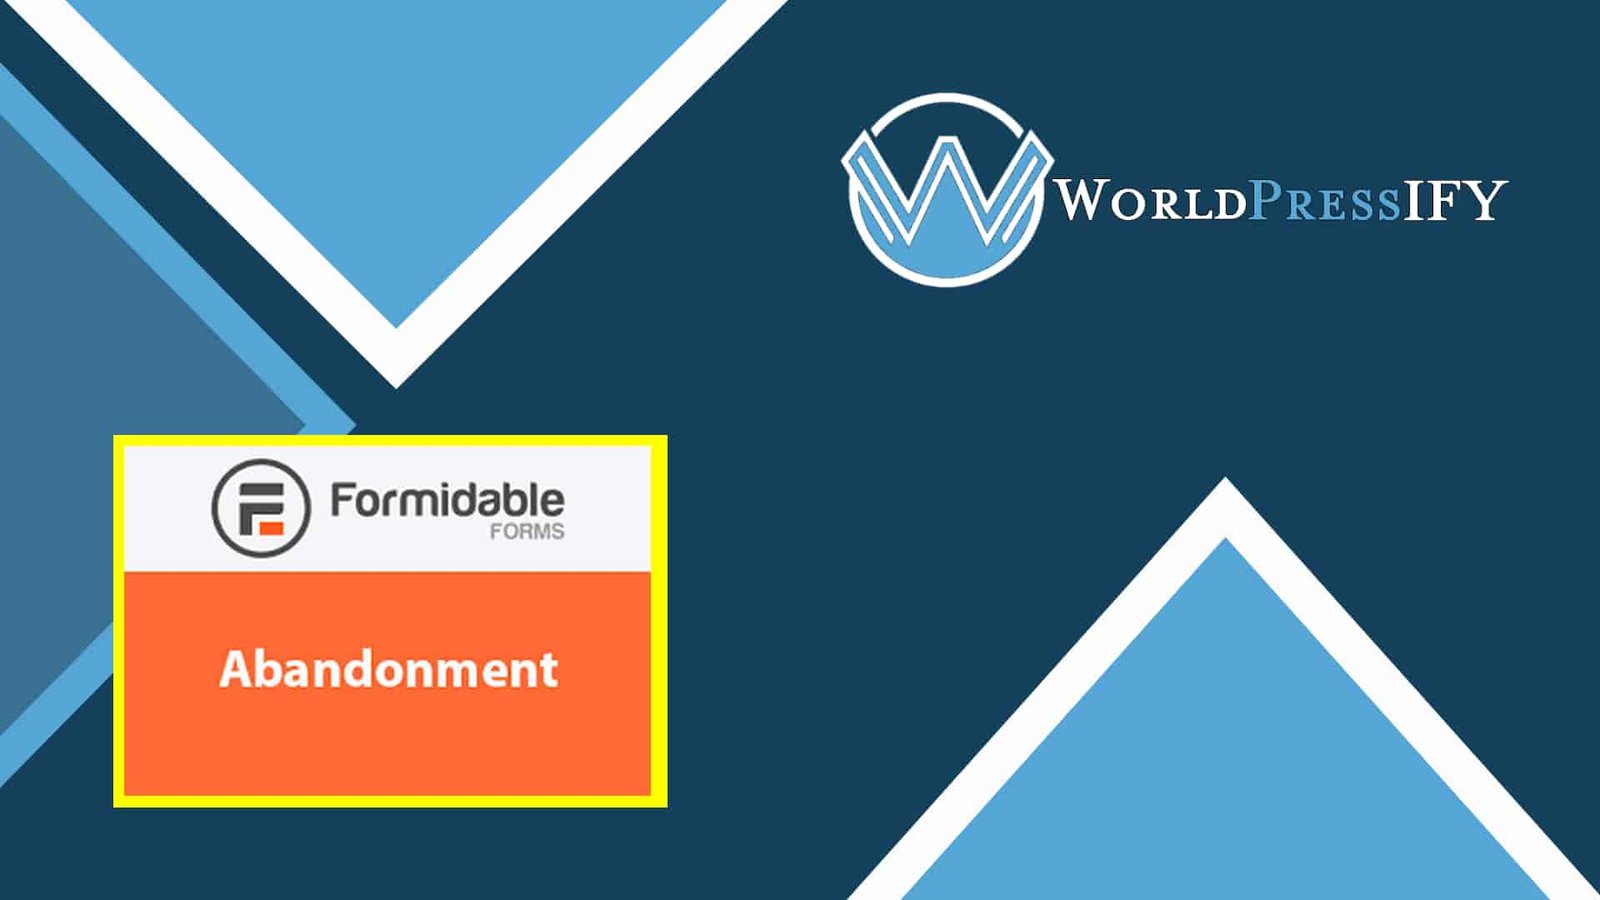 Formidable Abandonment - WorldPress IFY